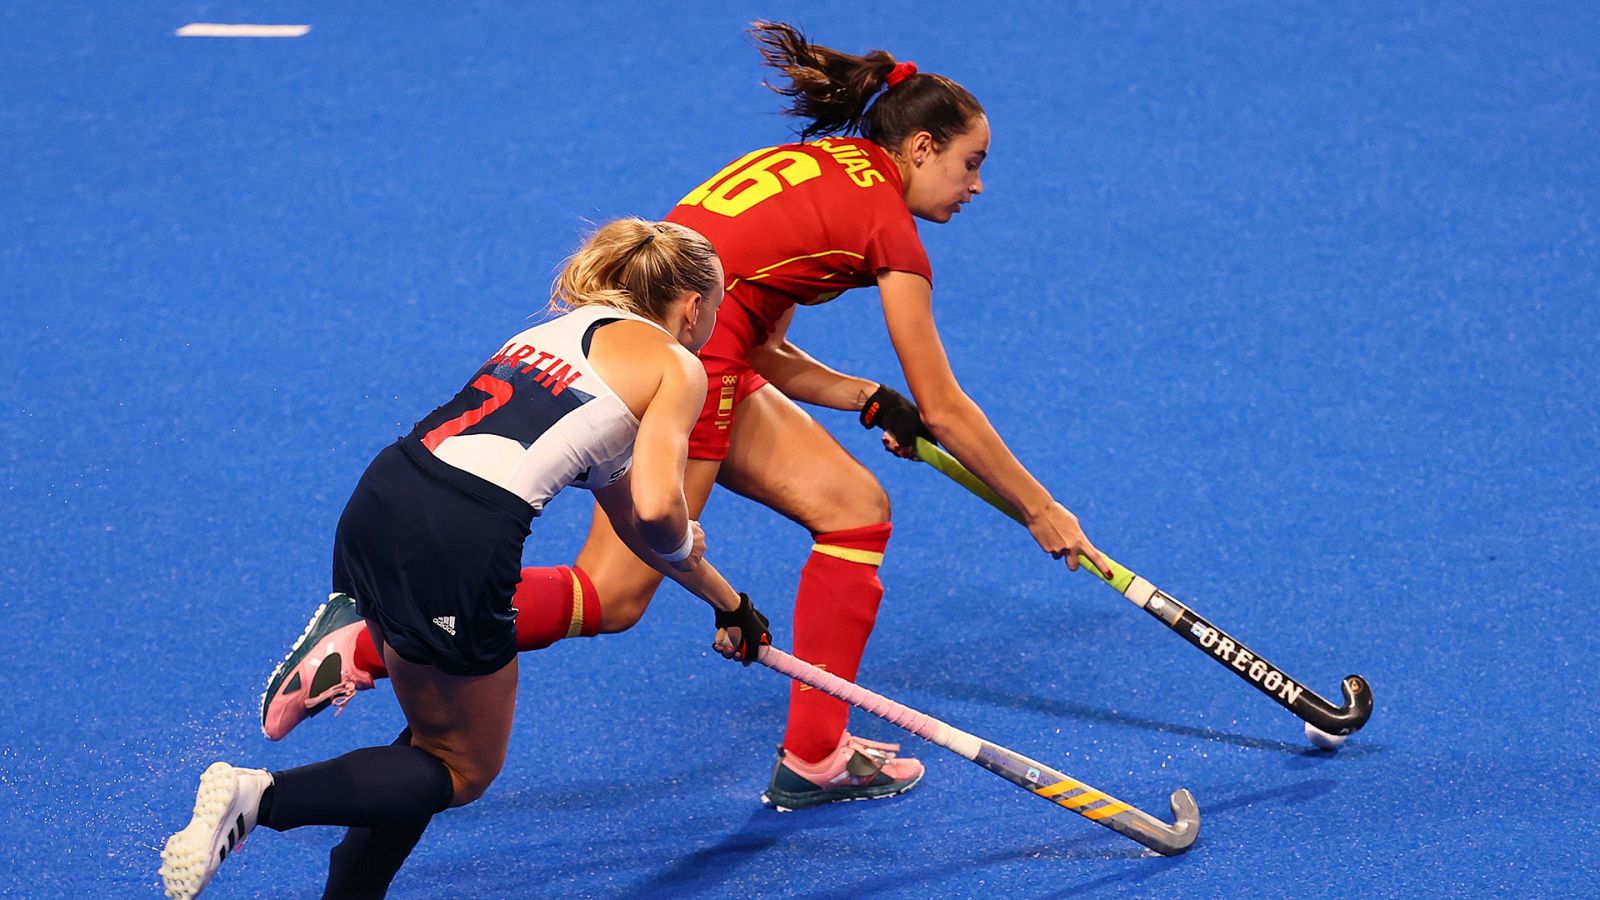 Hockey hierba femenino. Cuartos de final: España - Gran Bretaña | Tokio 2020